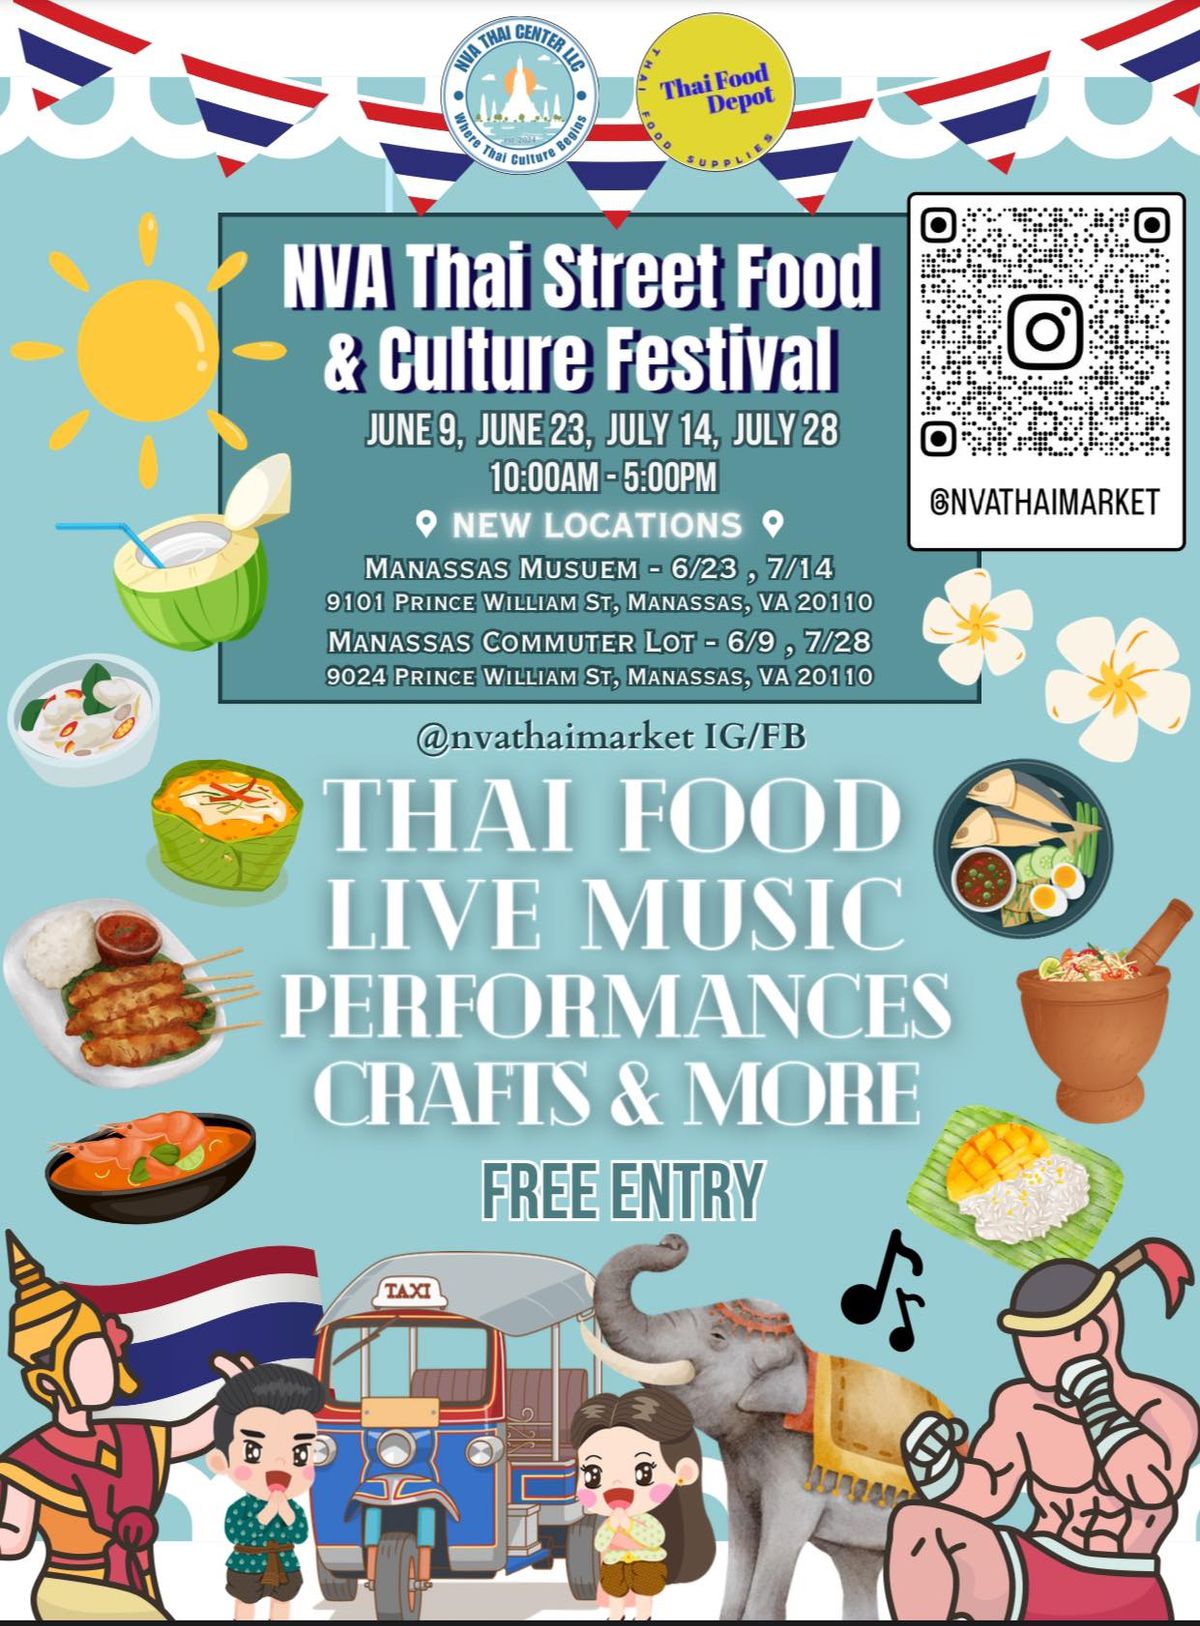 NVA Thai Street Food & Culture Festival 